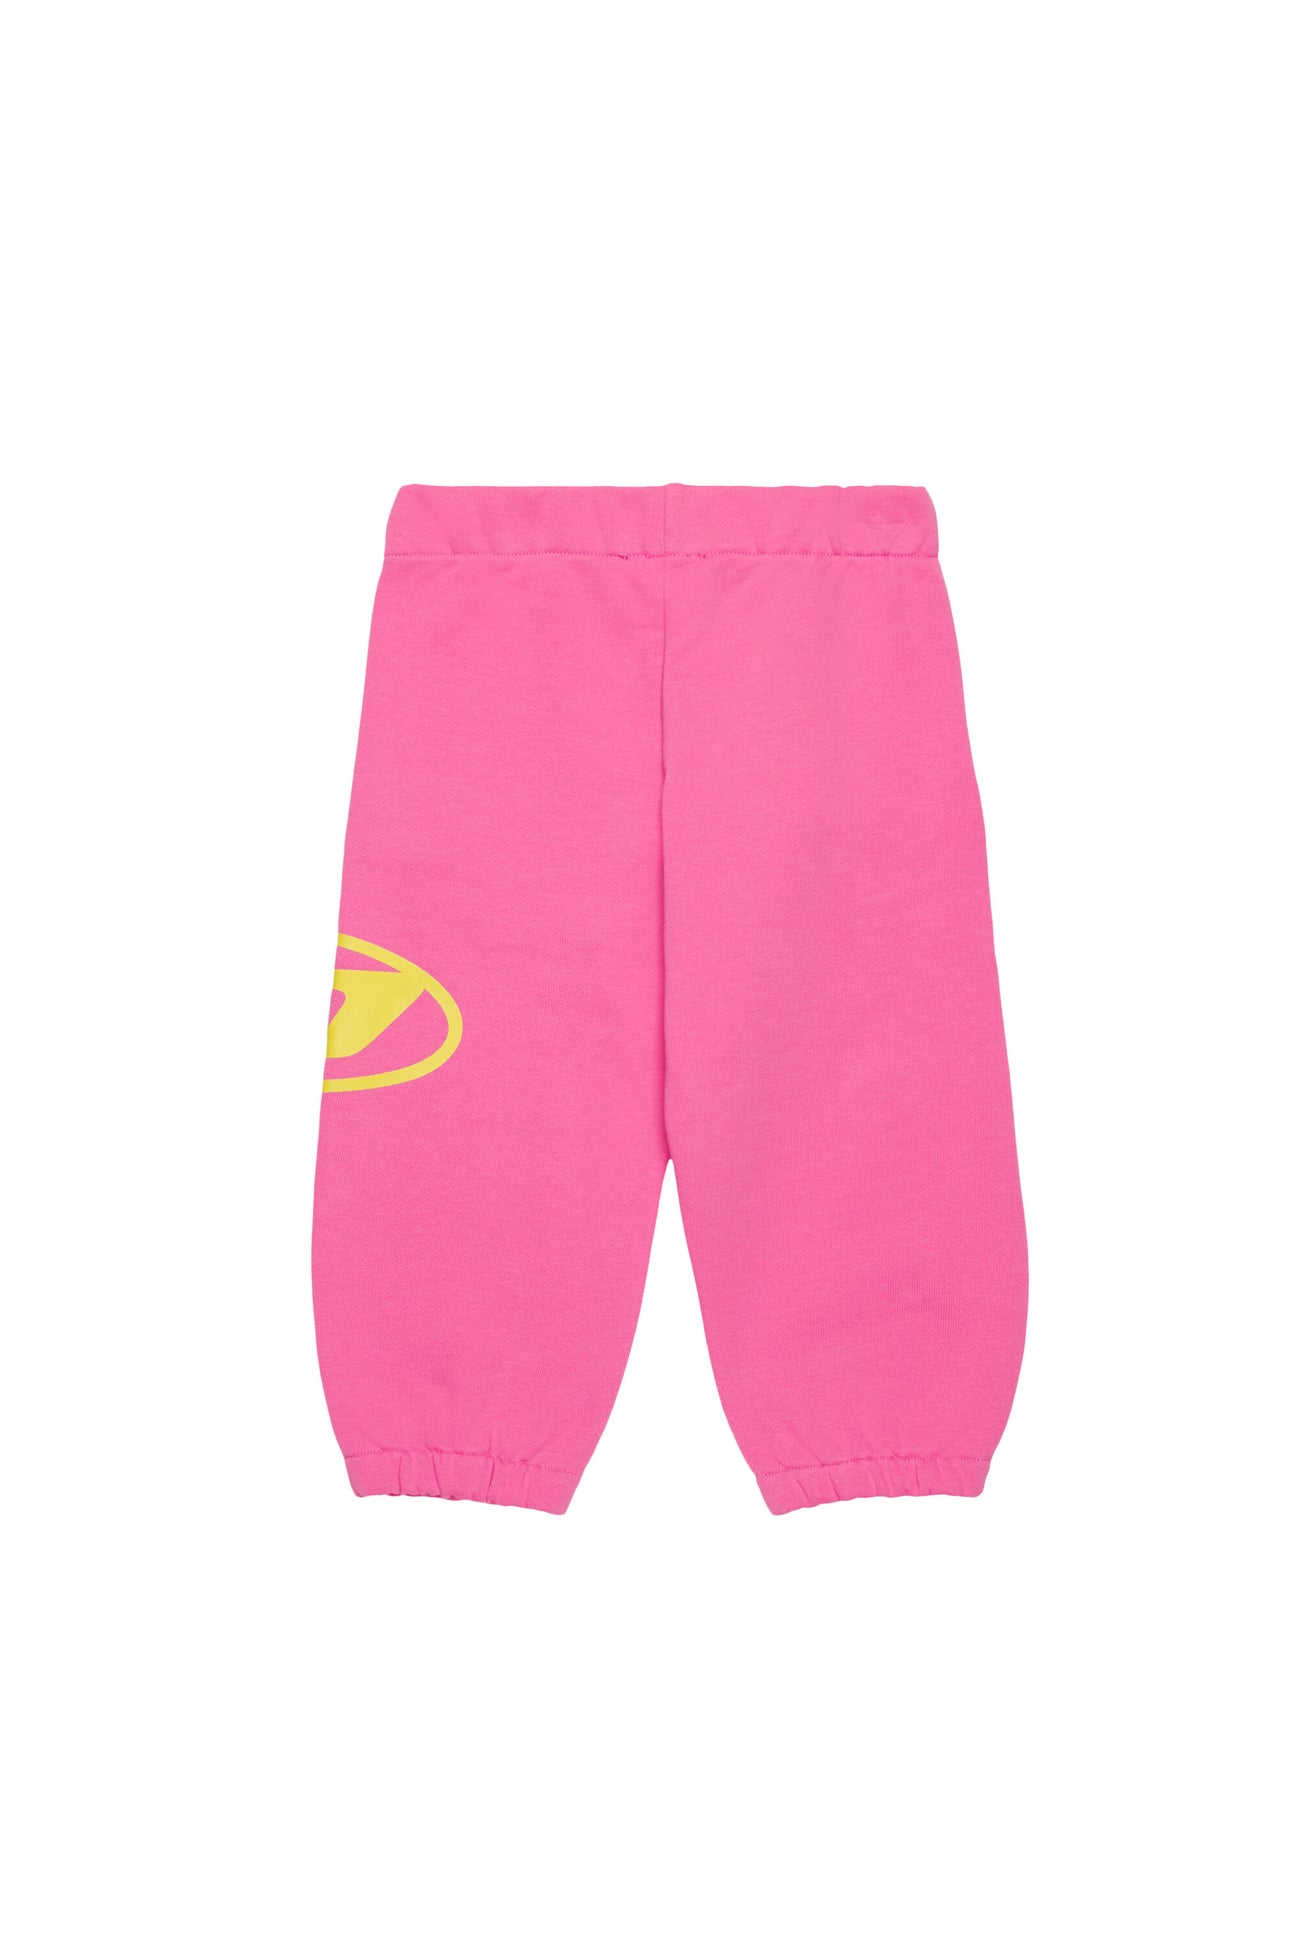 Pantalones deportivos en chándal con logotipo Oval D Pantalones deportivos en chándal con logotipo Oval D